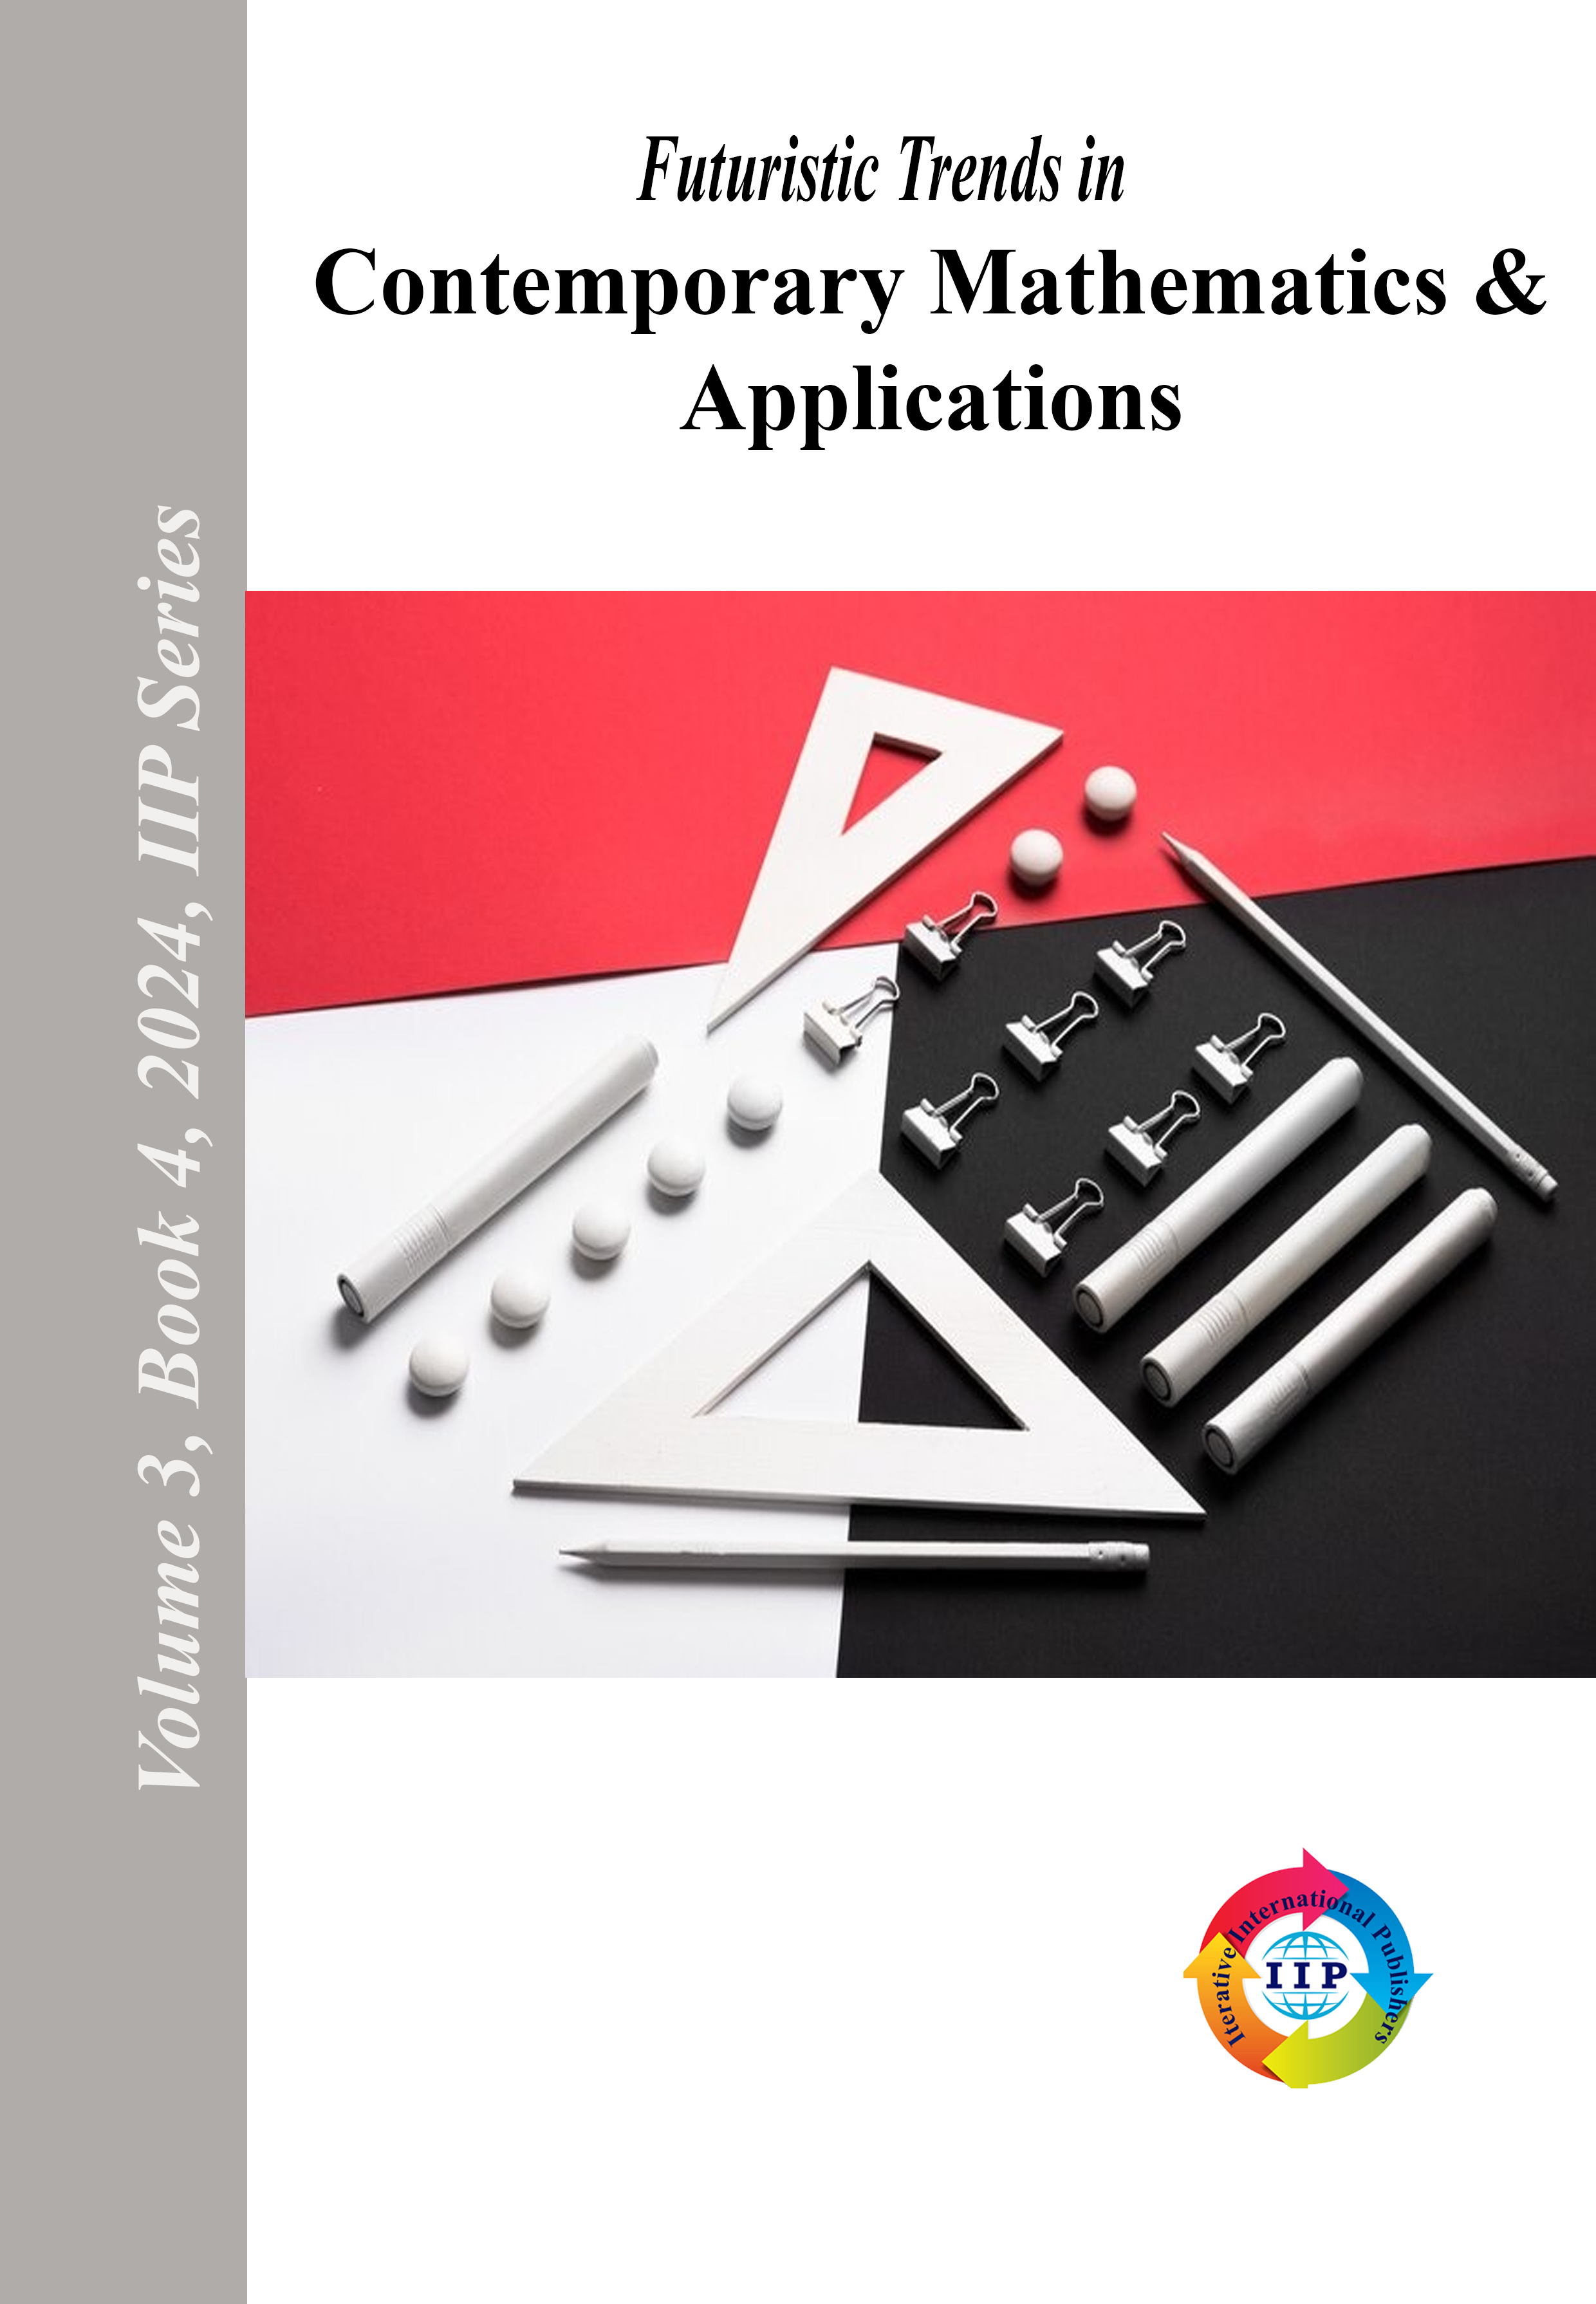 Futuristic Trends in Contemporary Mathematics & Applications Volume 3 Book 4